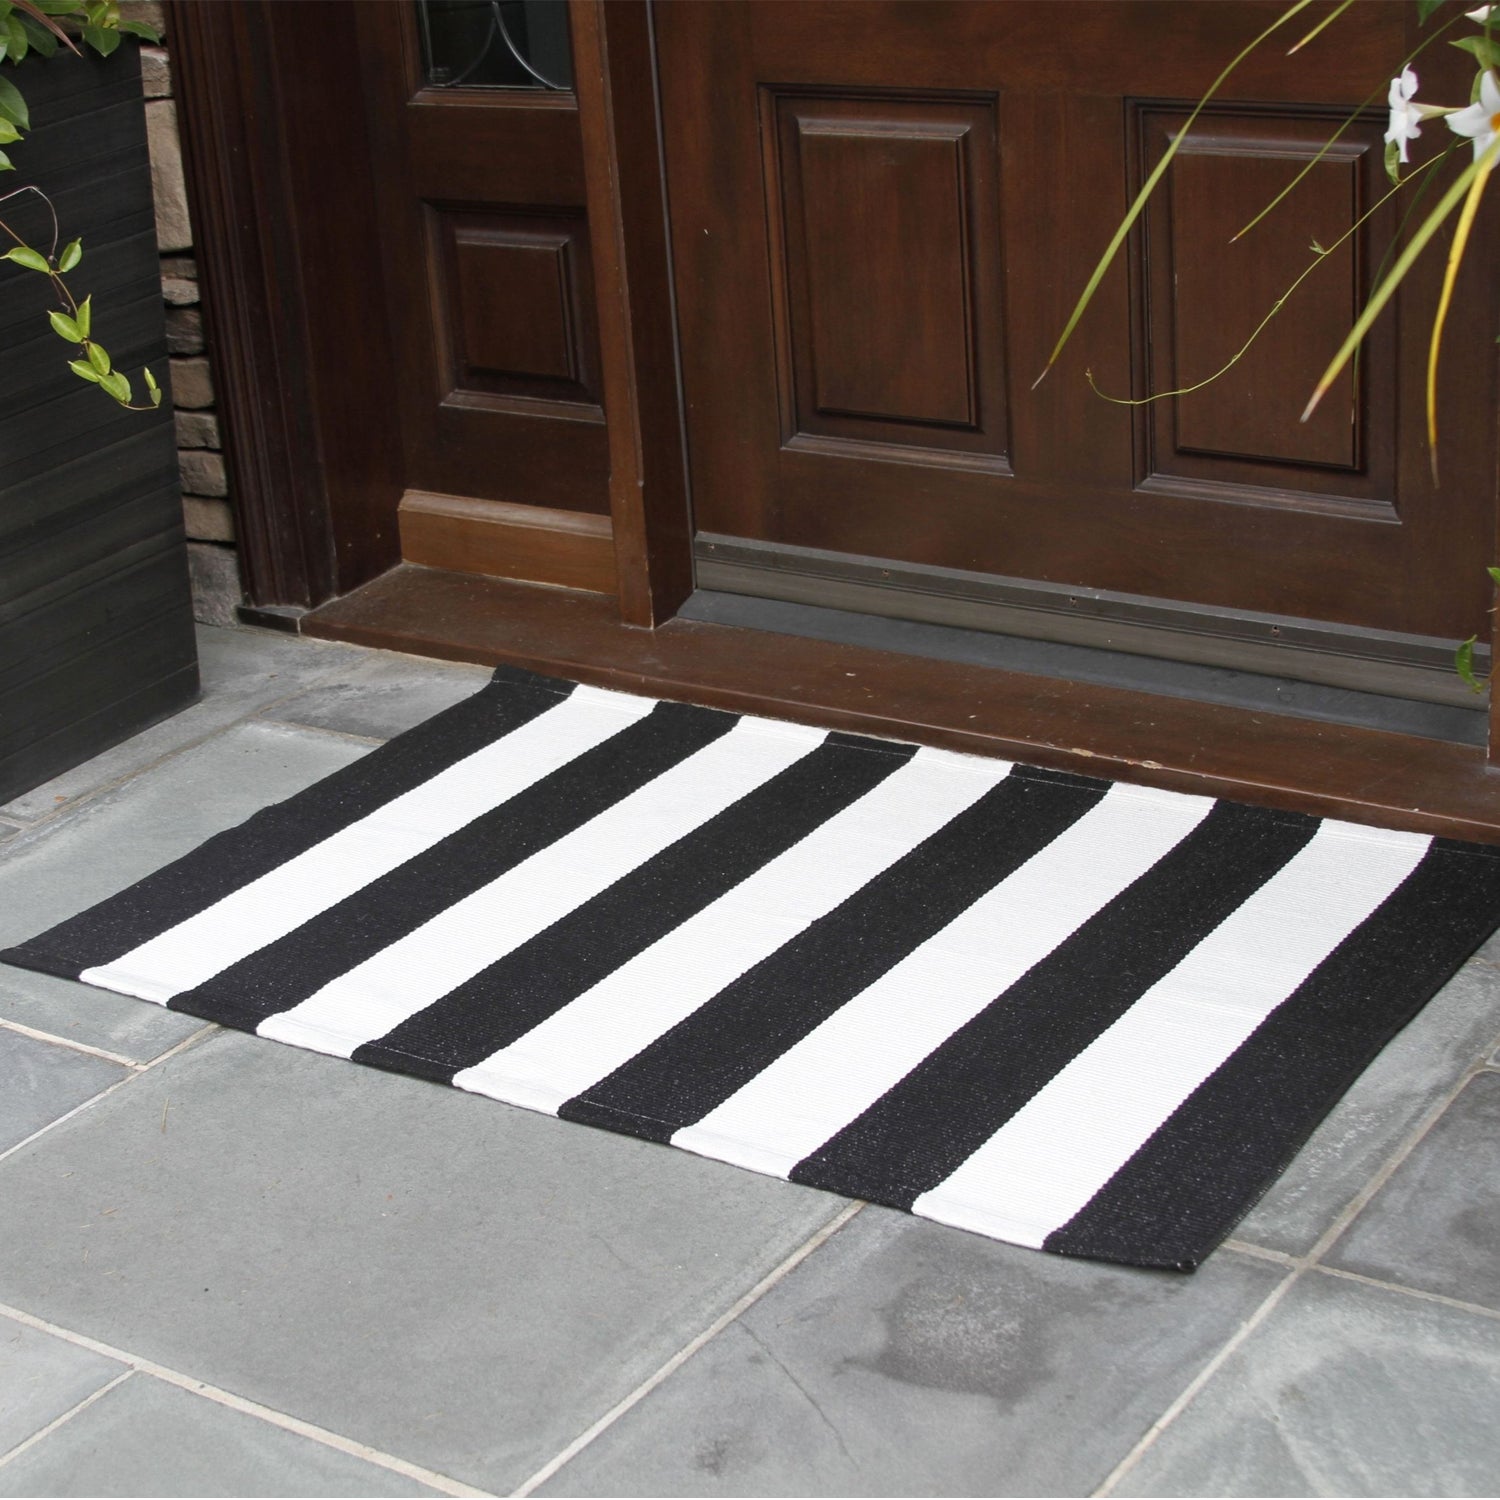 Cotton Black & White Striped Rug 27.5 x 43 Inches (Oversized 2'x3')